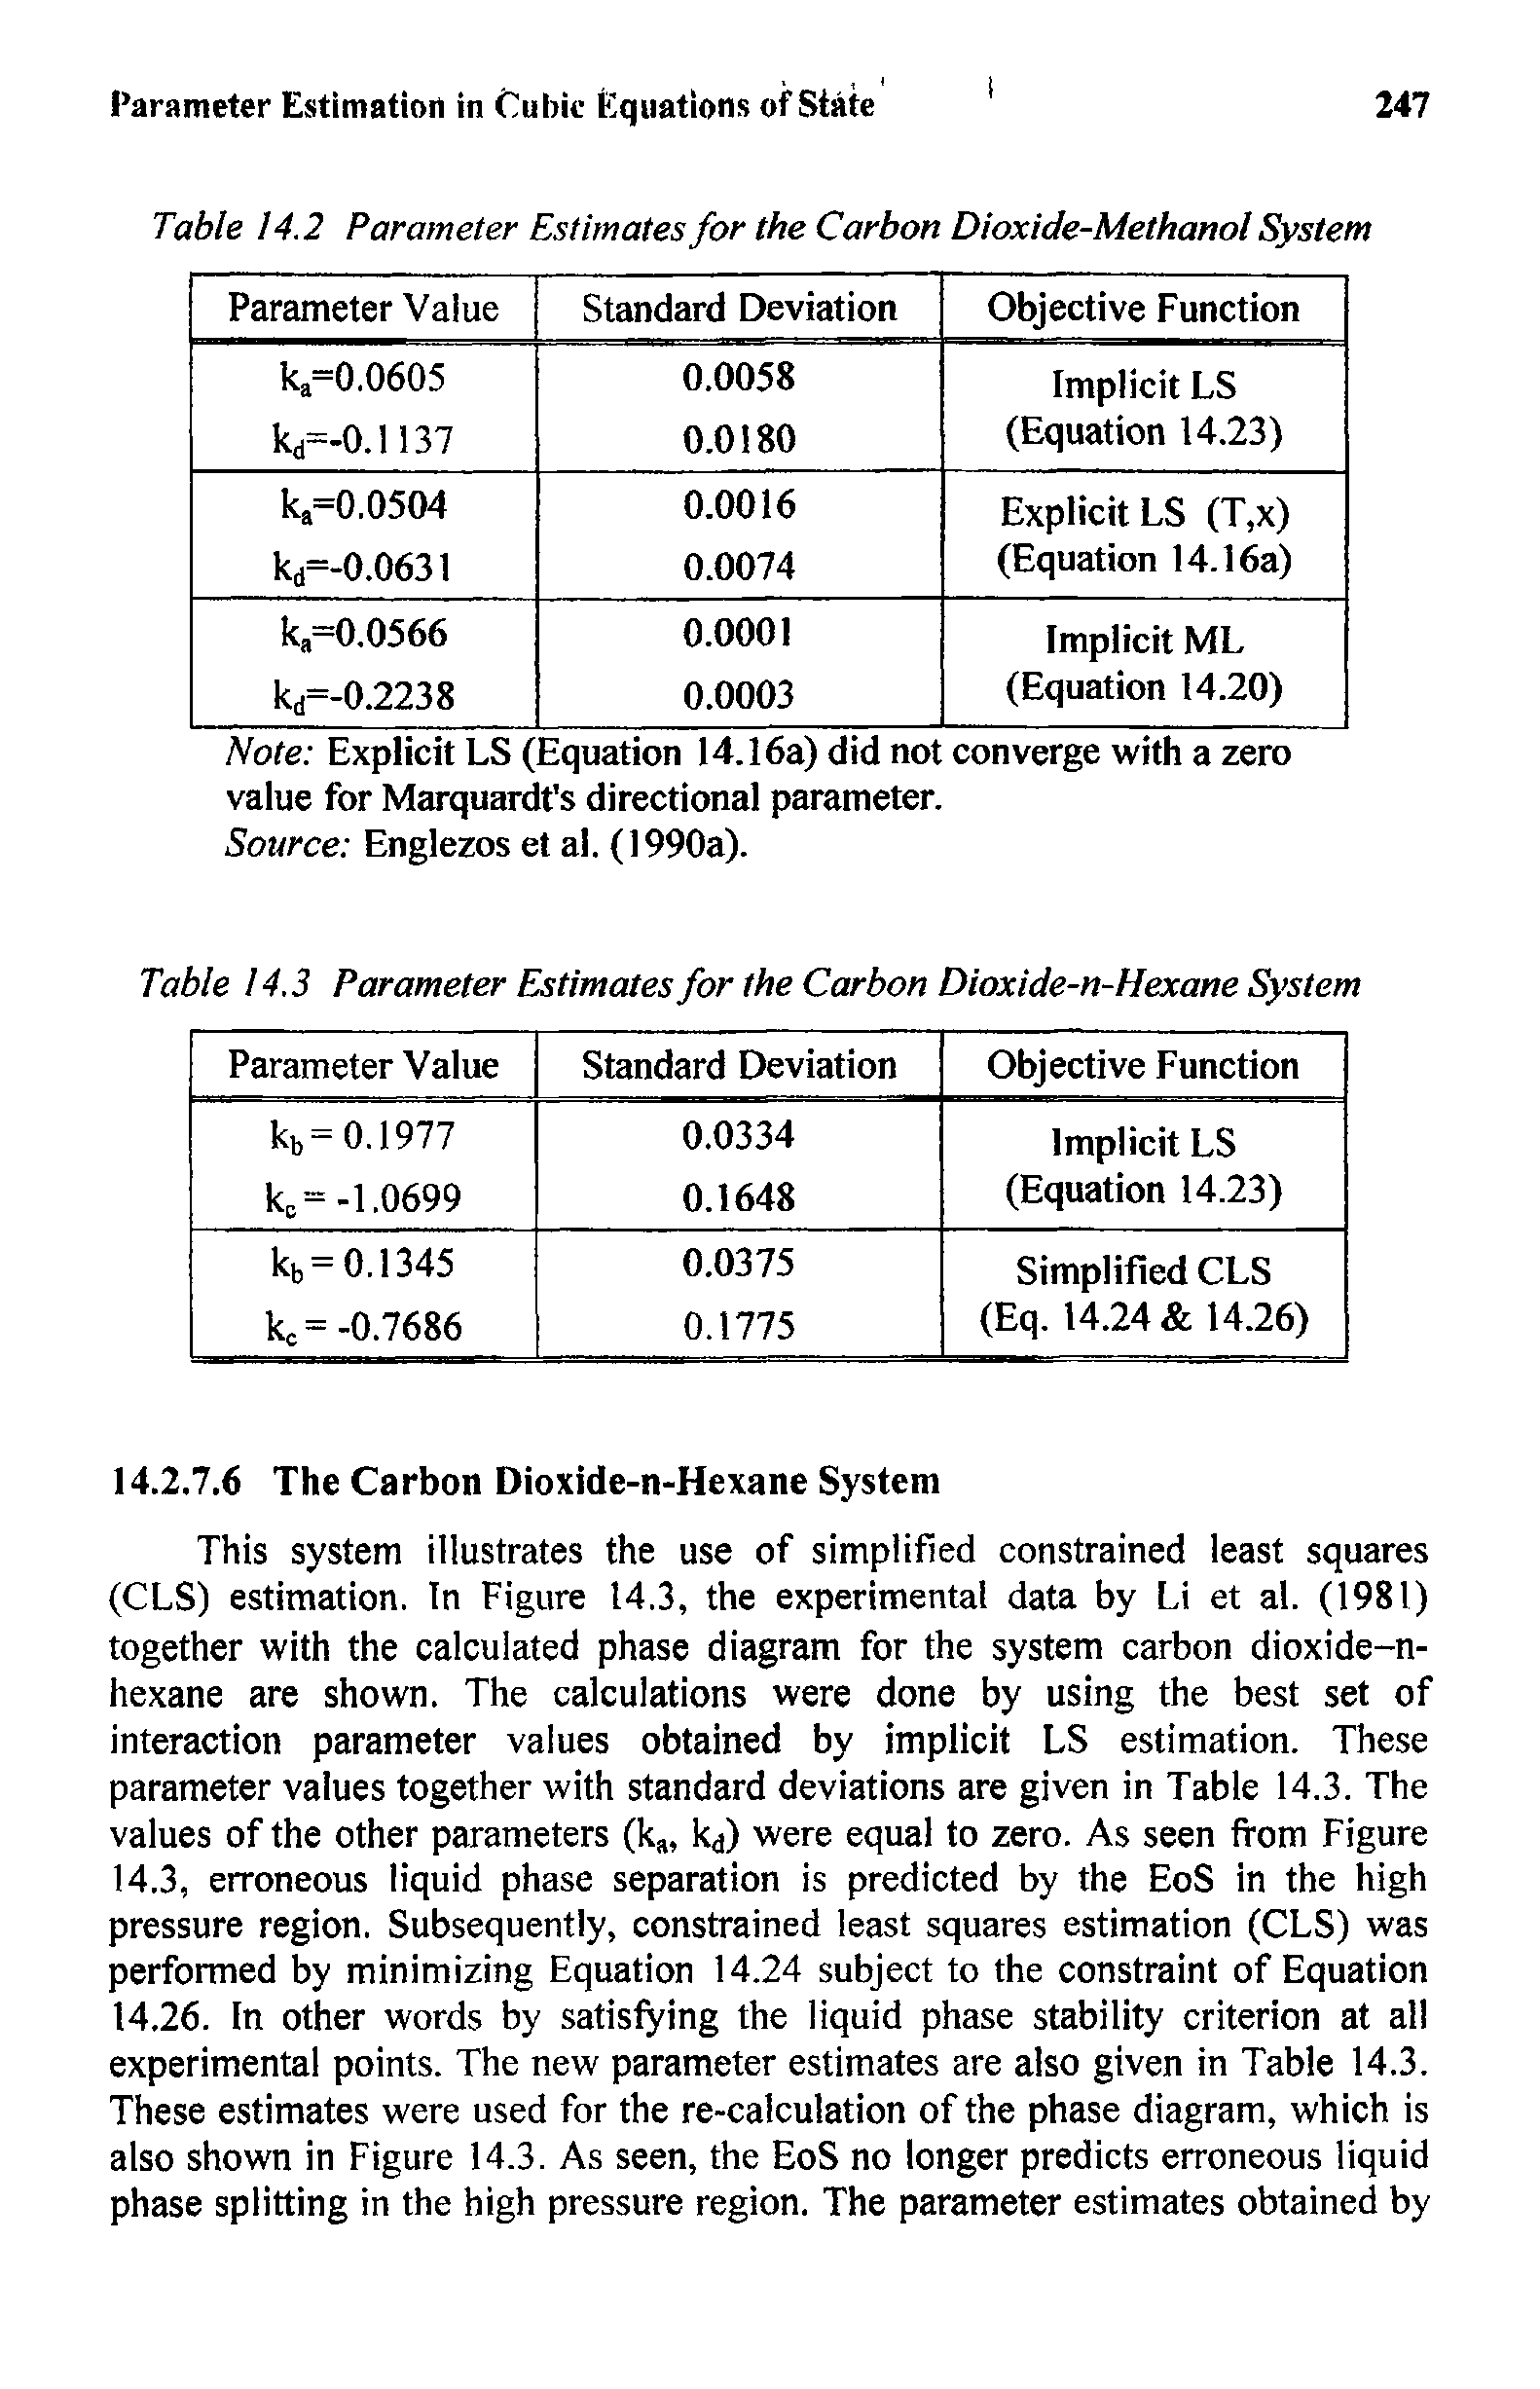 Table 14.2 Parameter Estimates for the Carbon Dioxide-Methanol System...